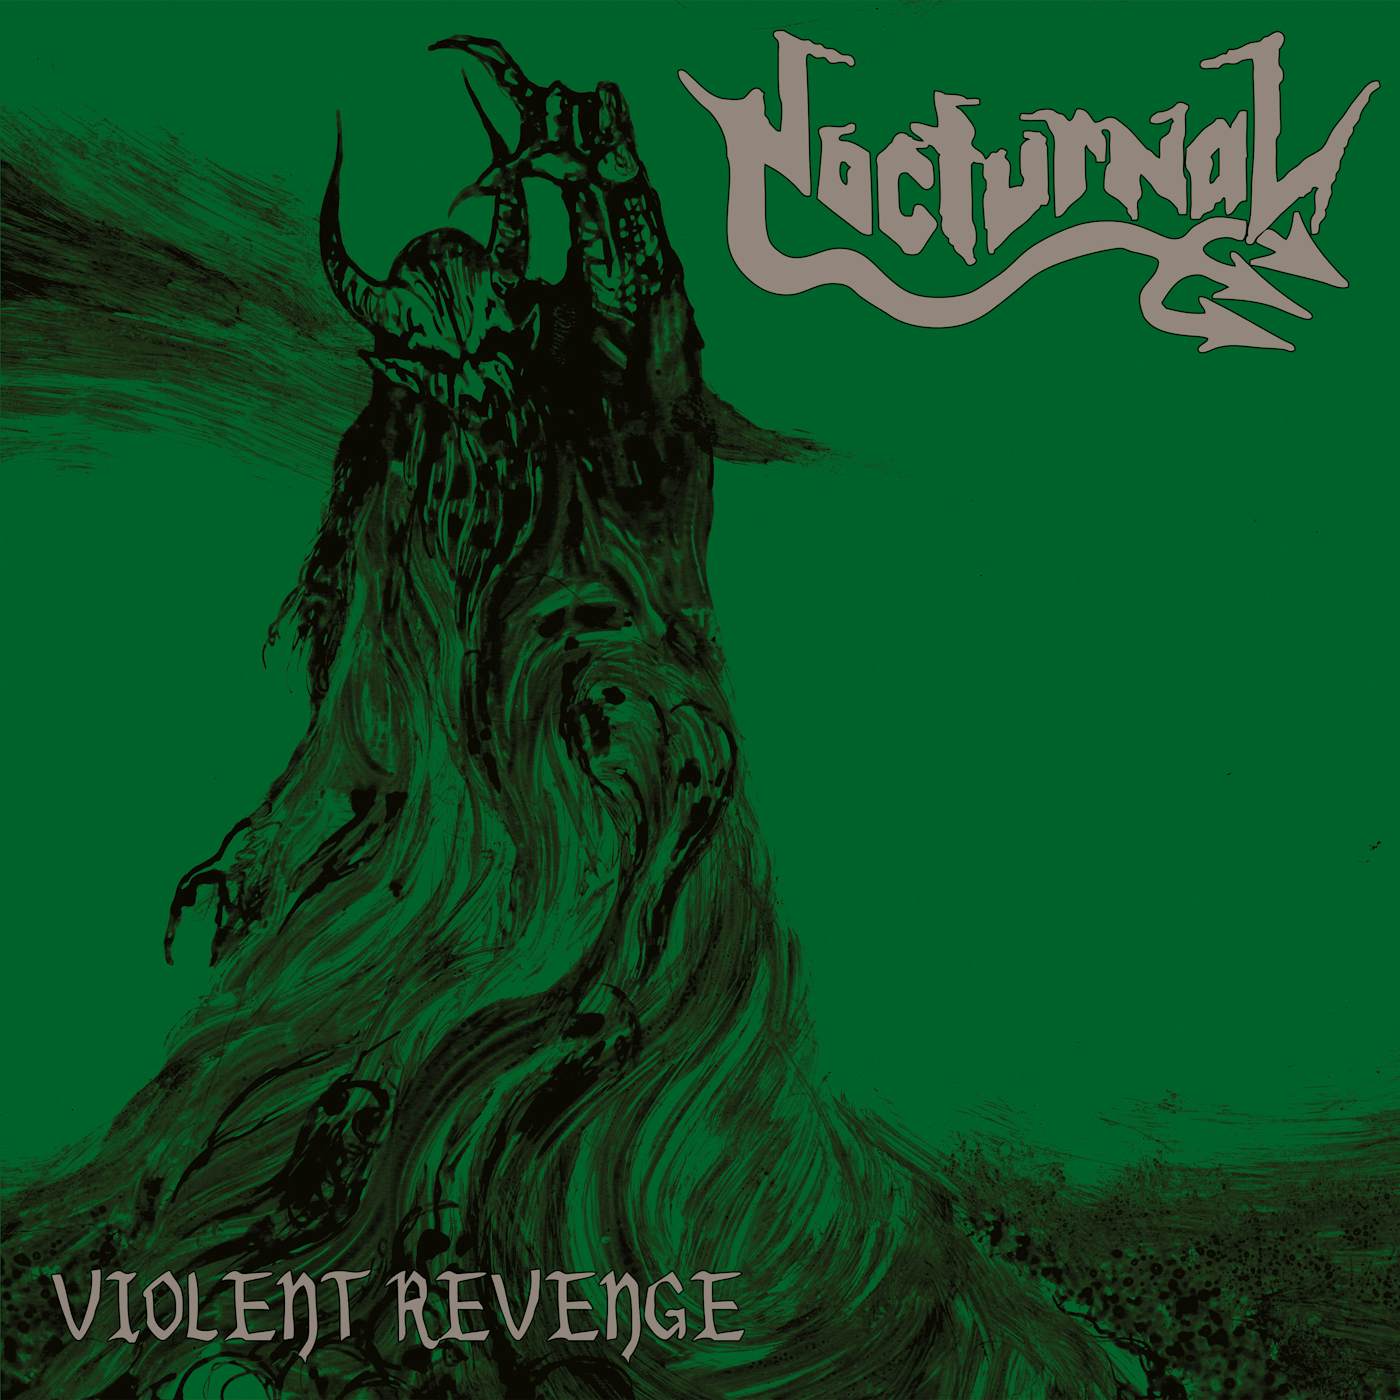 Nocturnal   Violent Revenge Vinyl Record